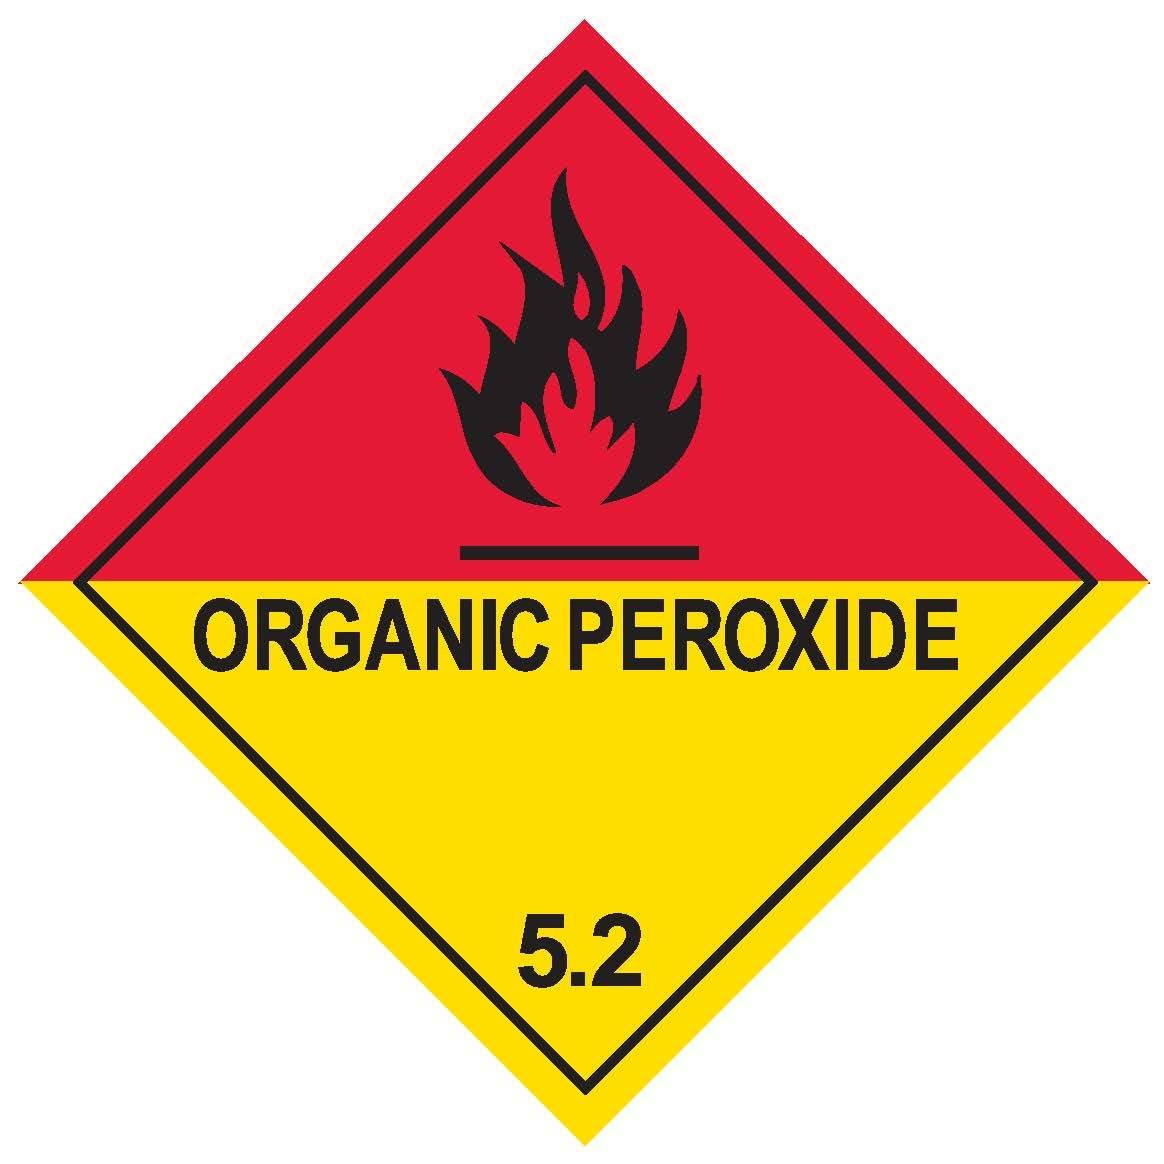 Organic Peroxide Hazard Class 5